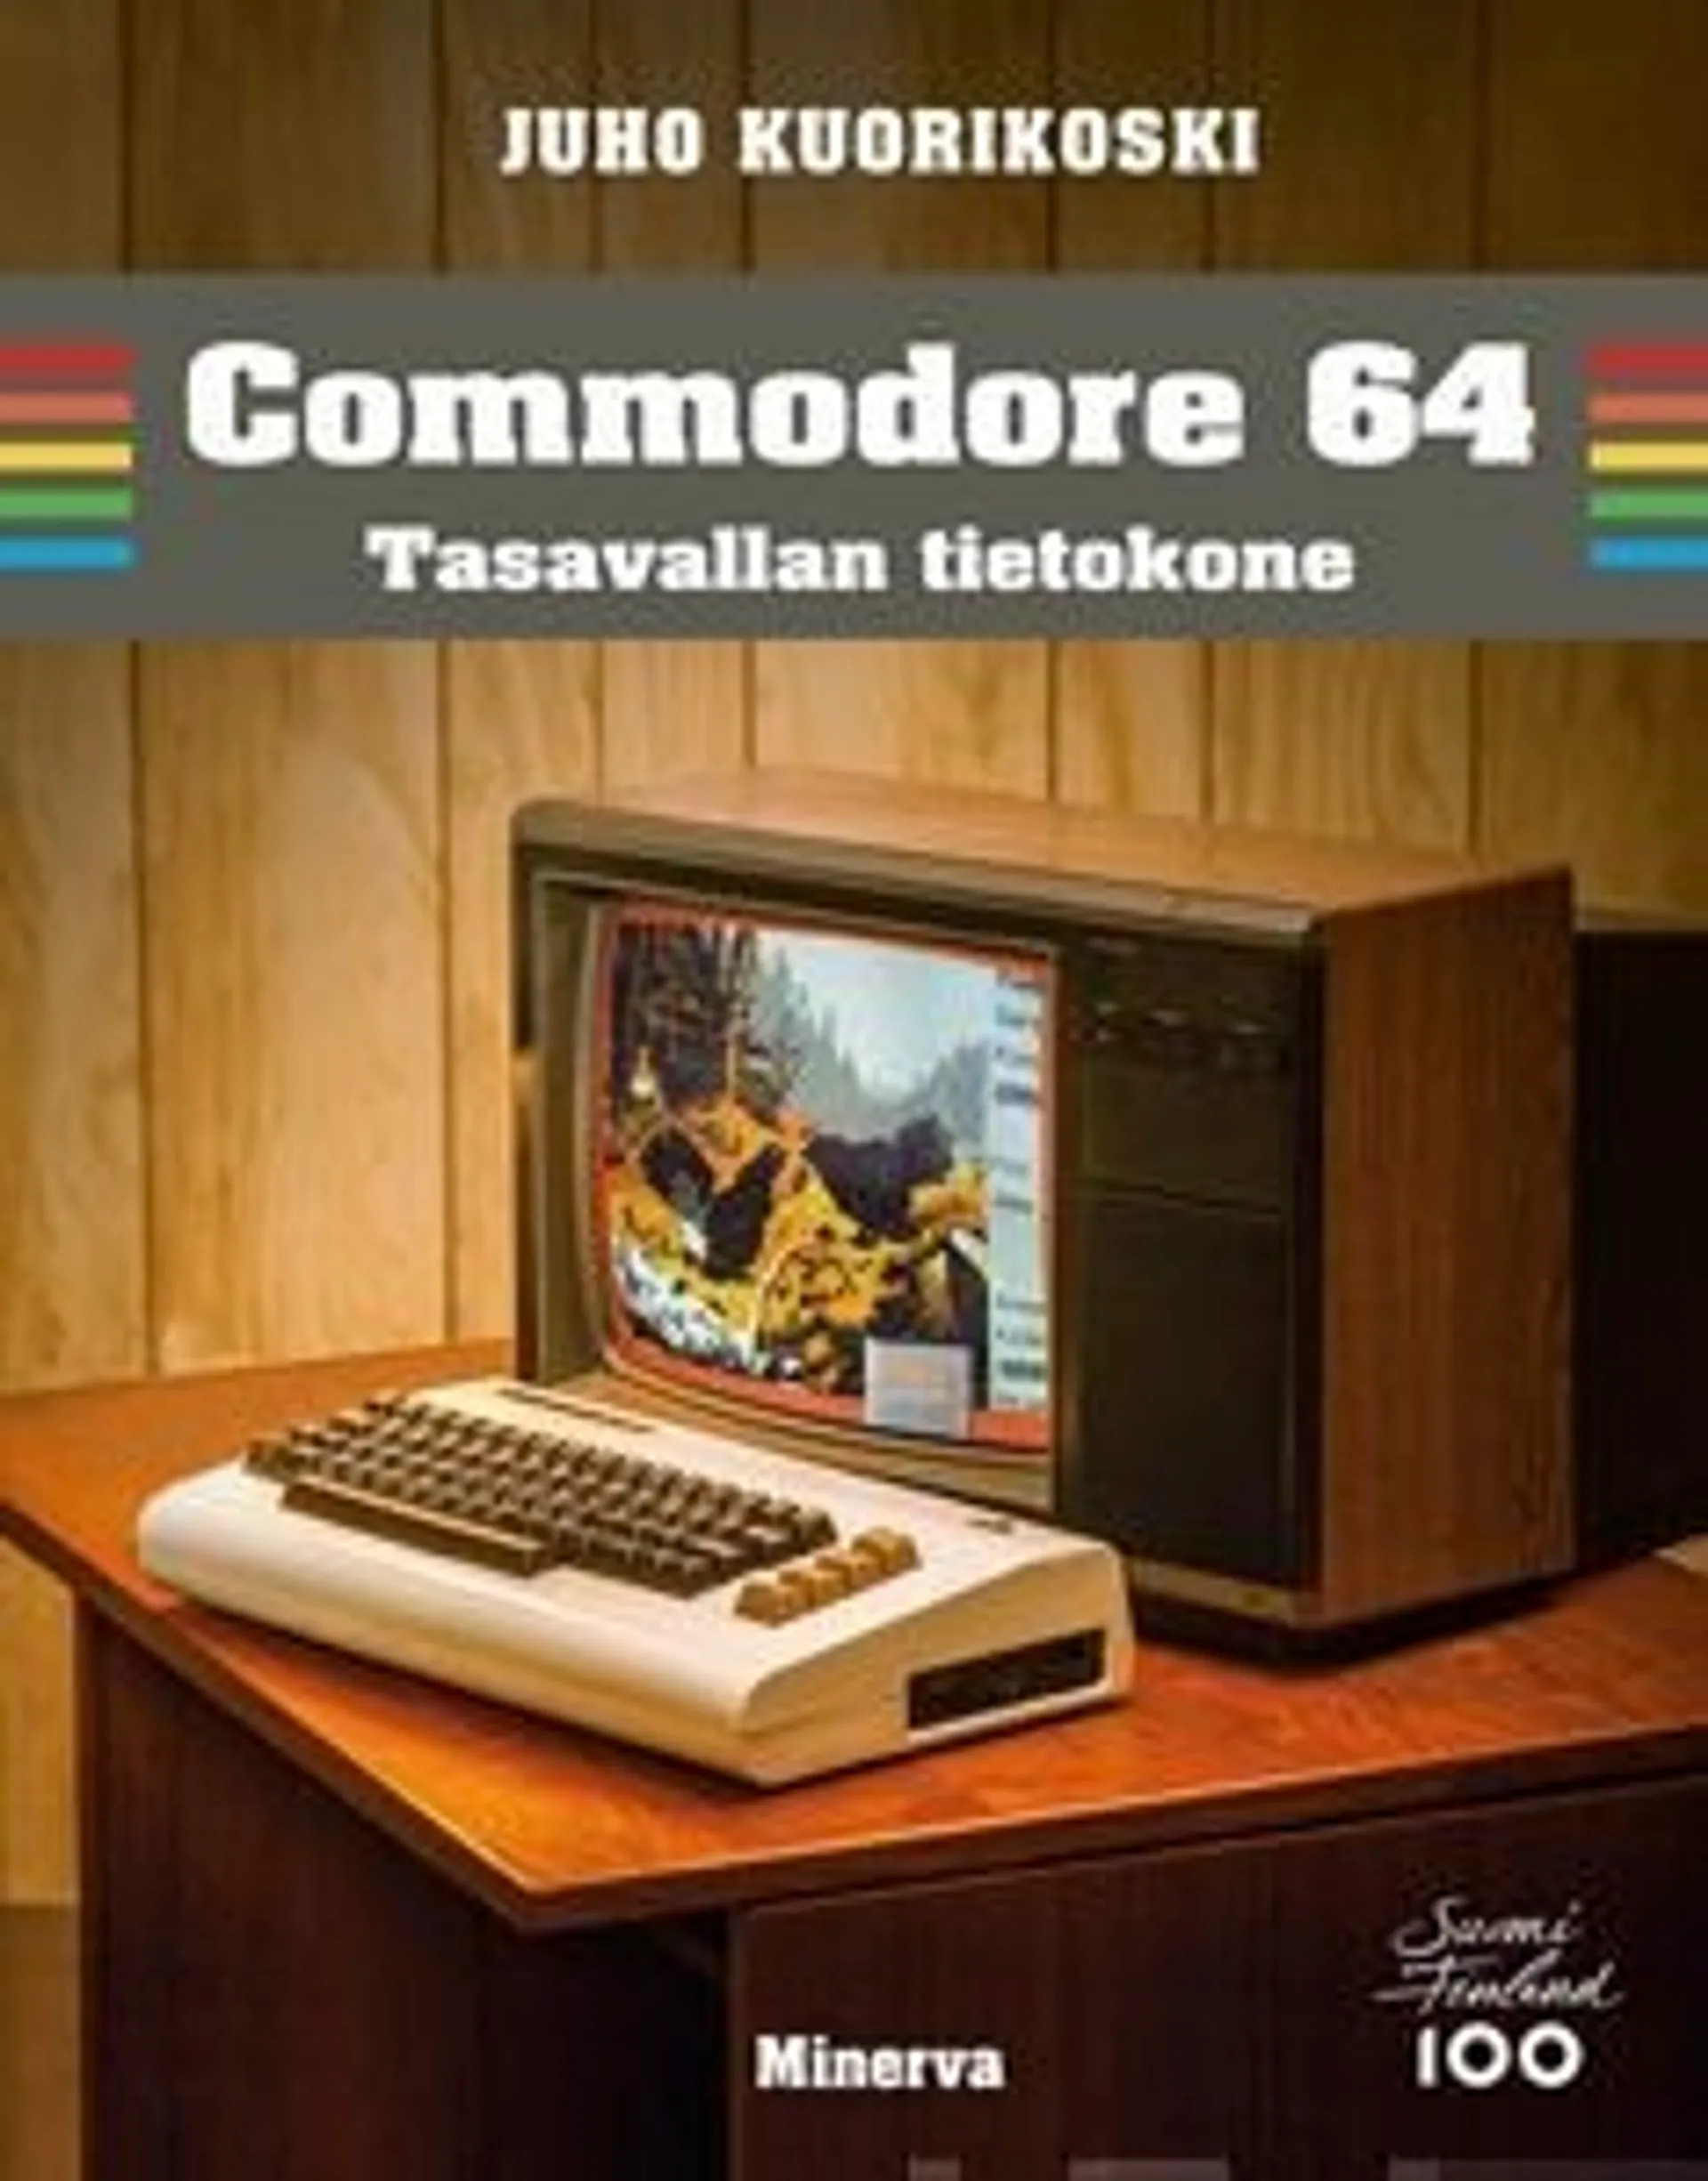 Kuorikoski, Commodore 64 - Tasavallan tietokone